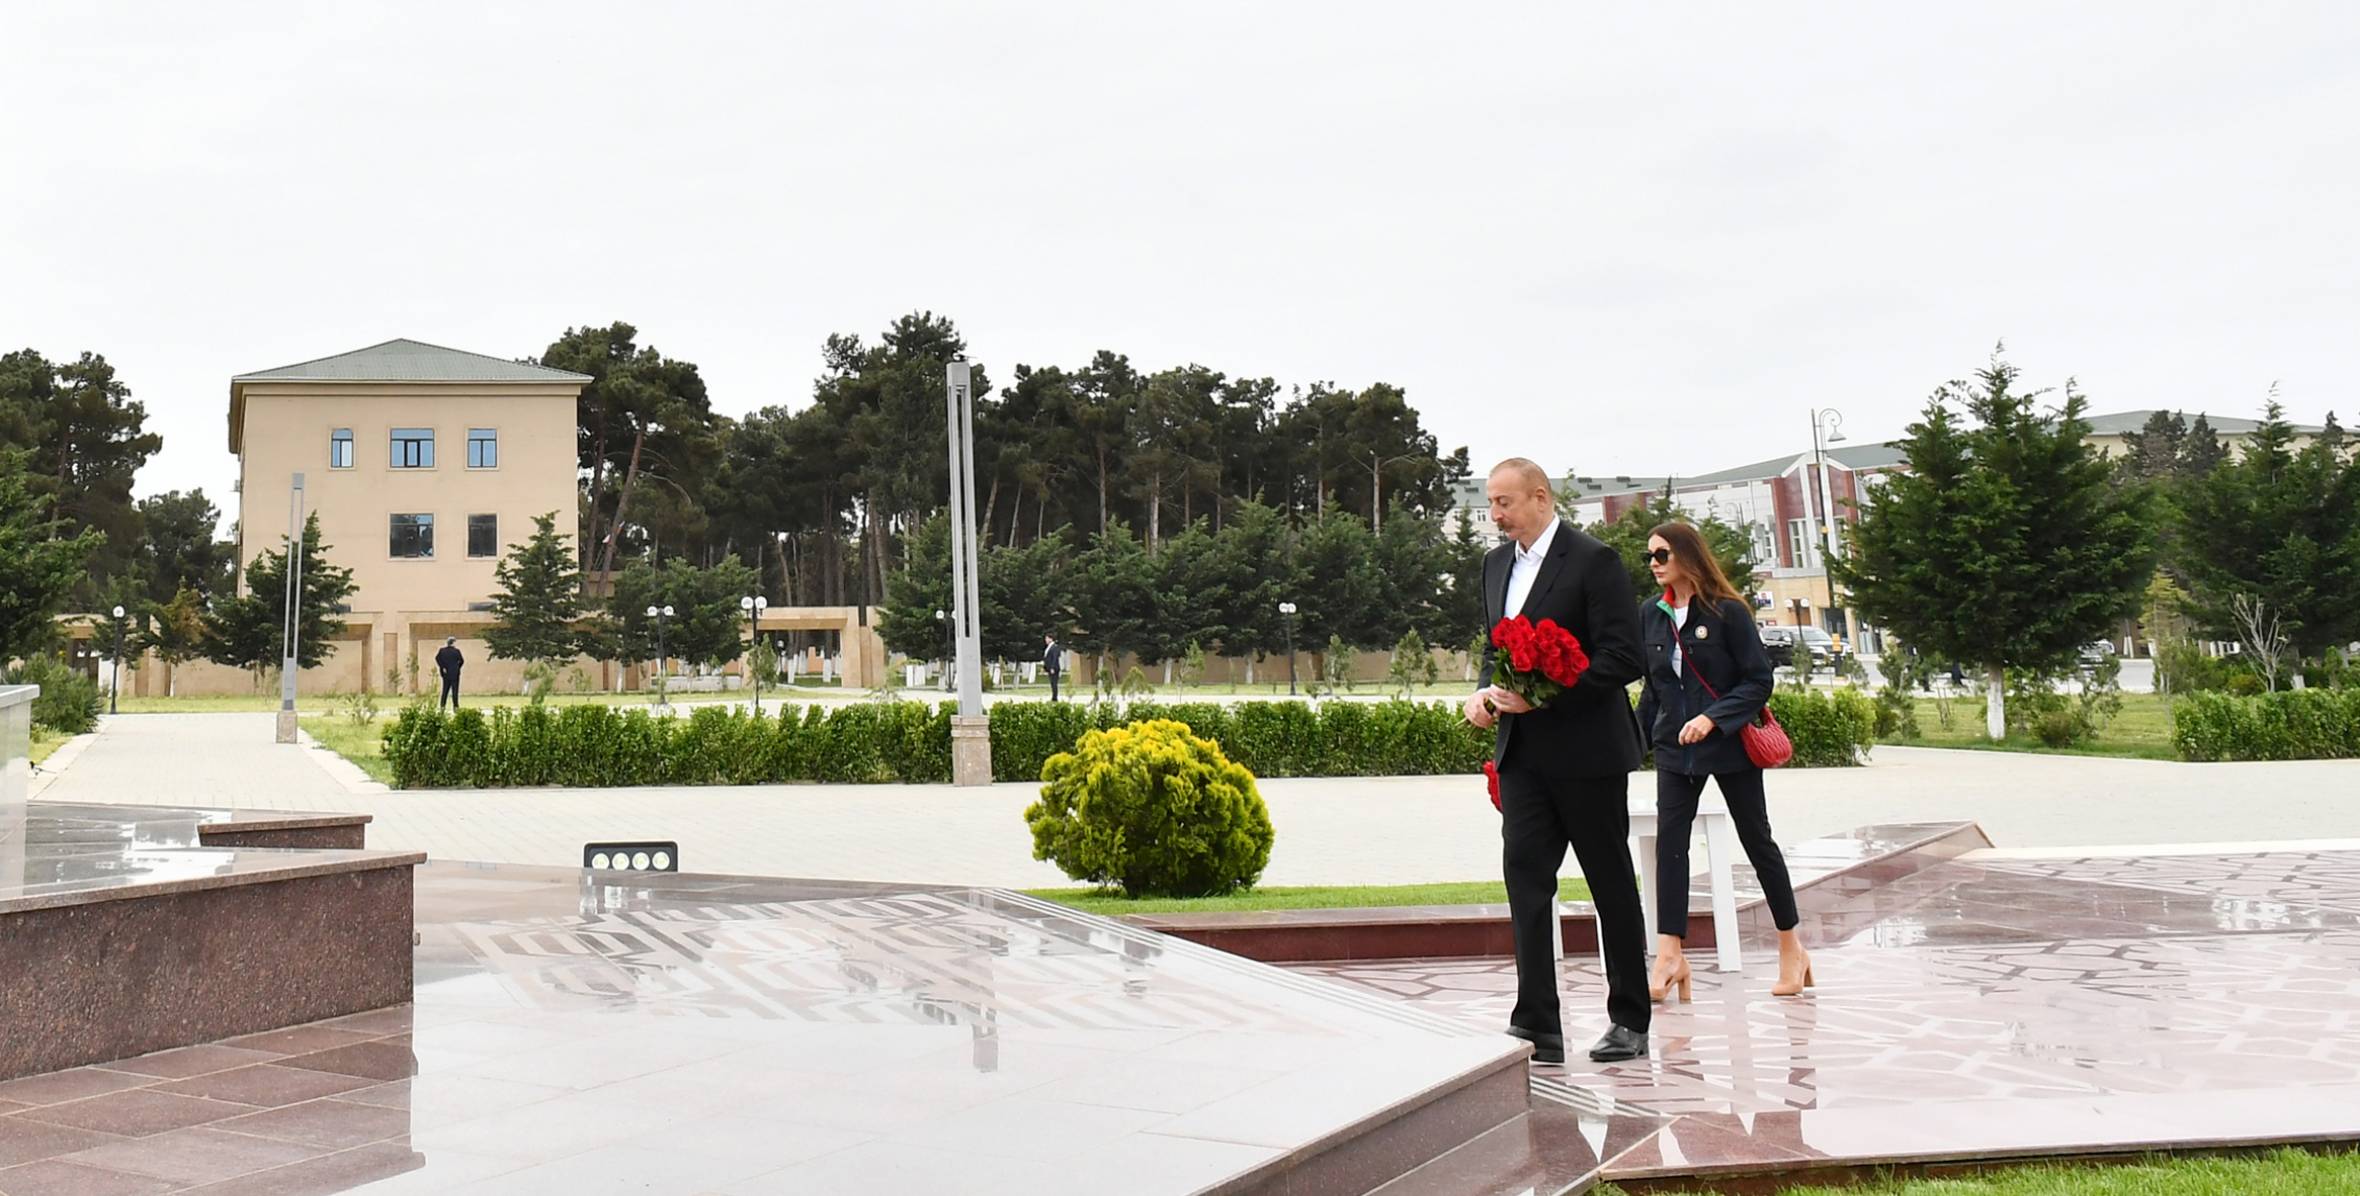 Ilham Aliyev and First Lady Mehriban Aliyeva visited Neftchala district